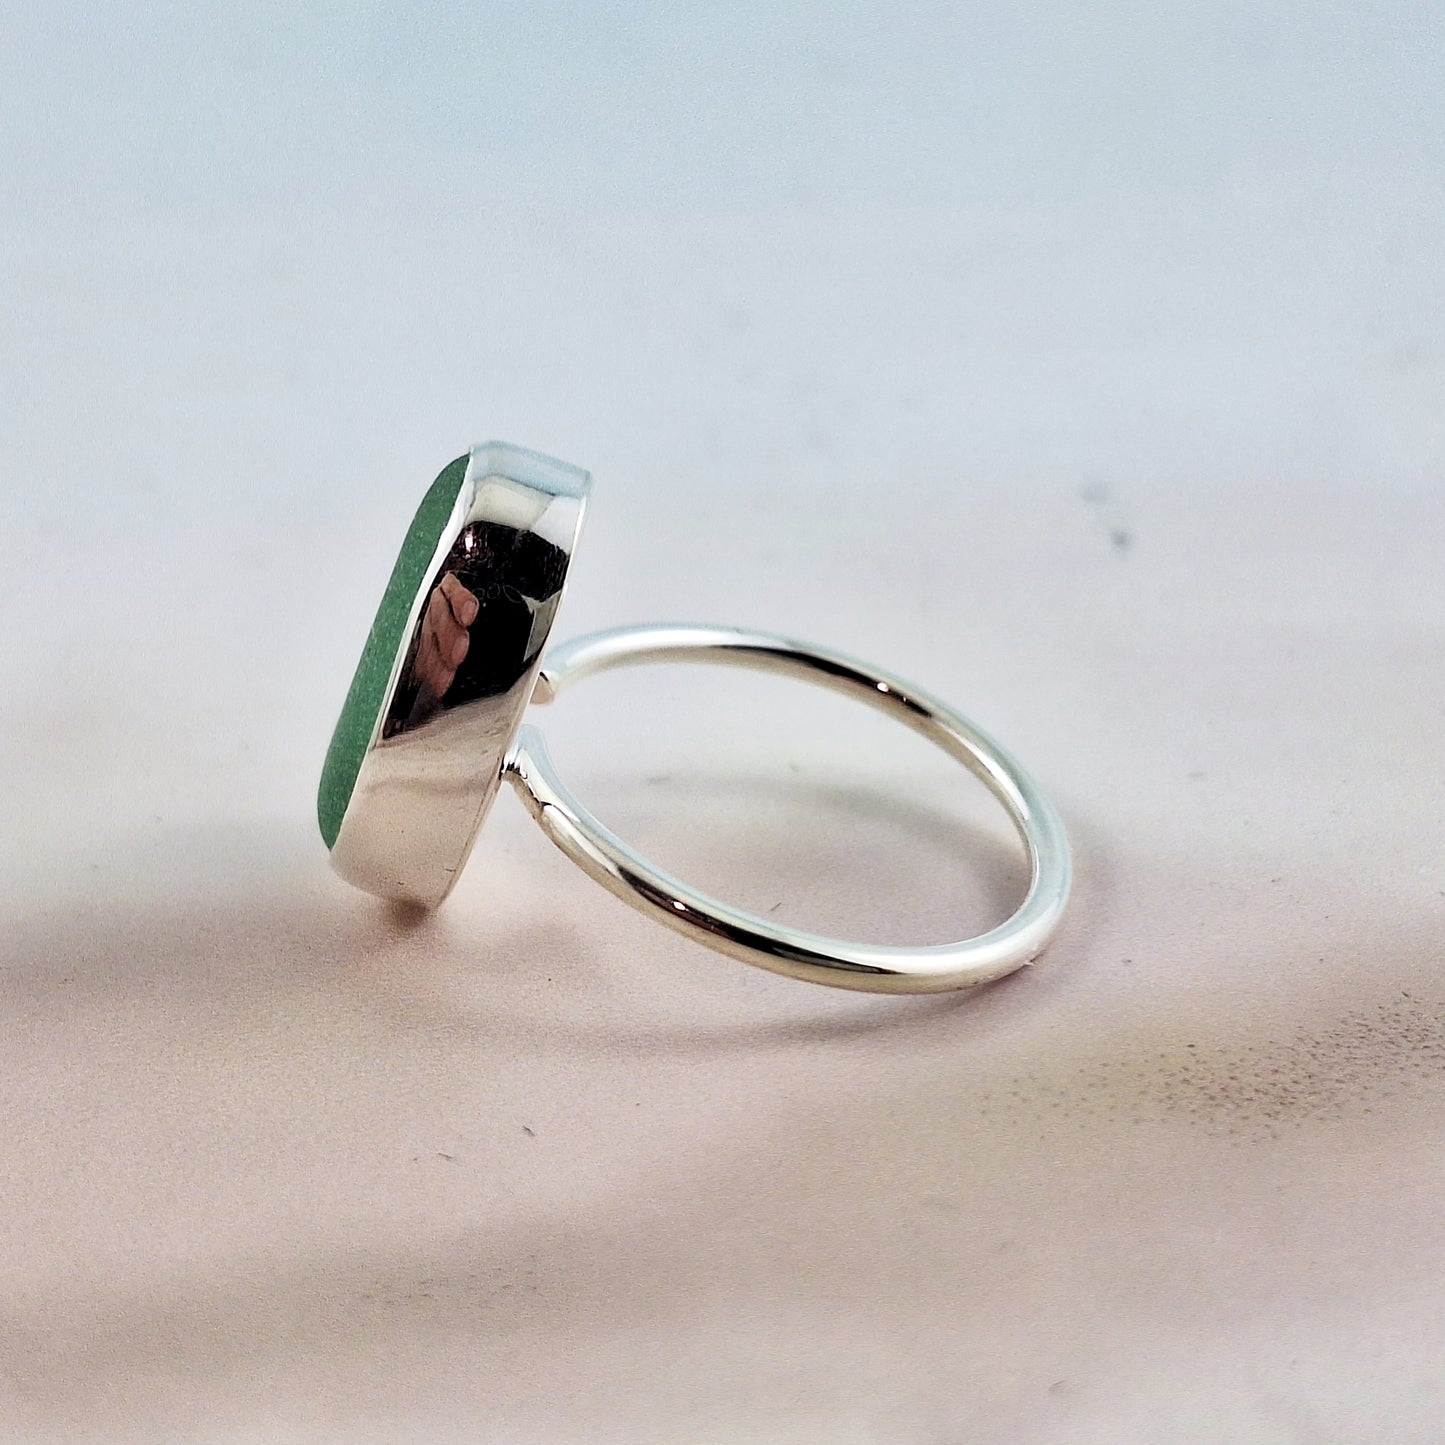 Ring size 7: Lagoon green Glass